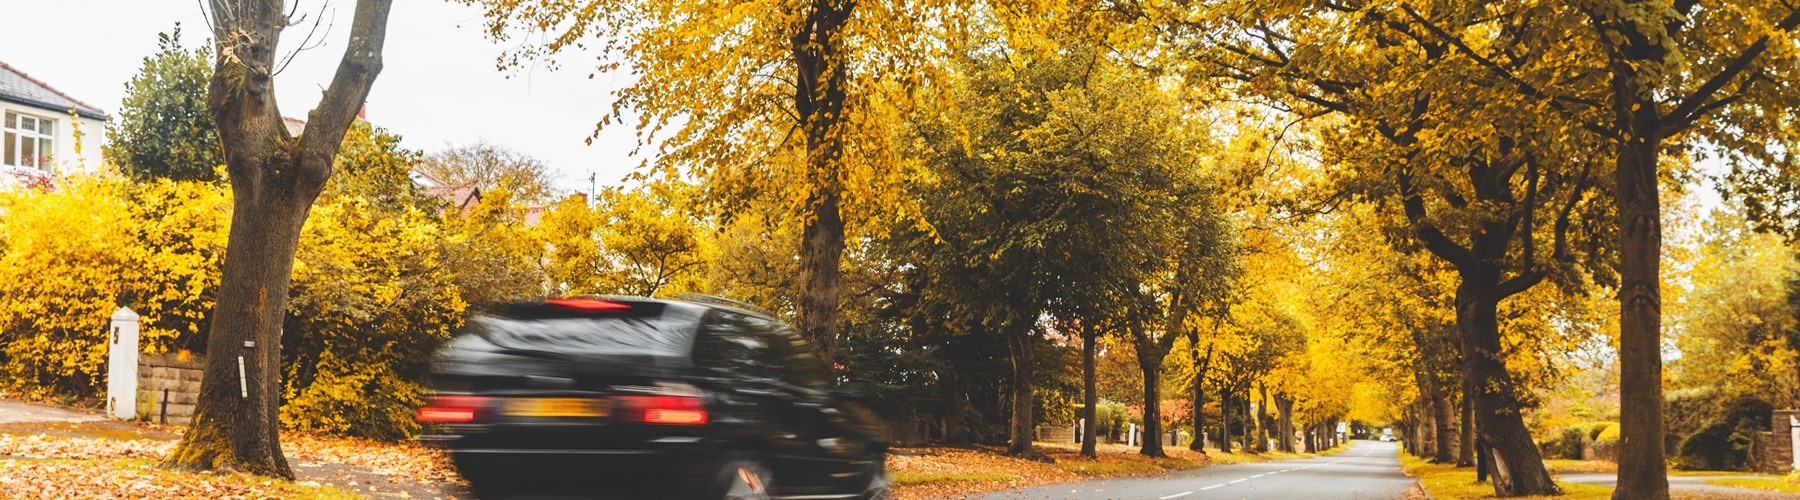 Black car driving in autumn